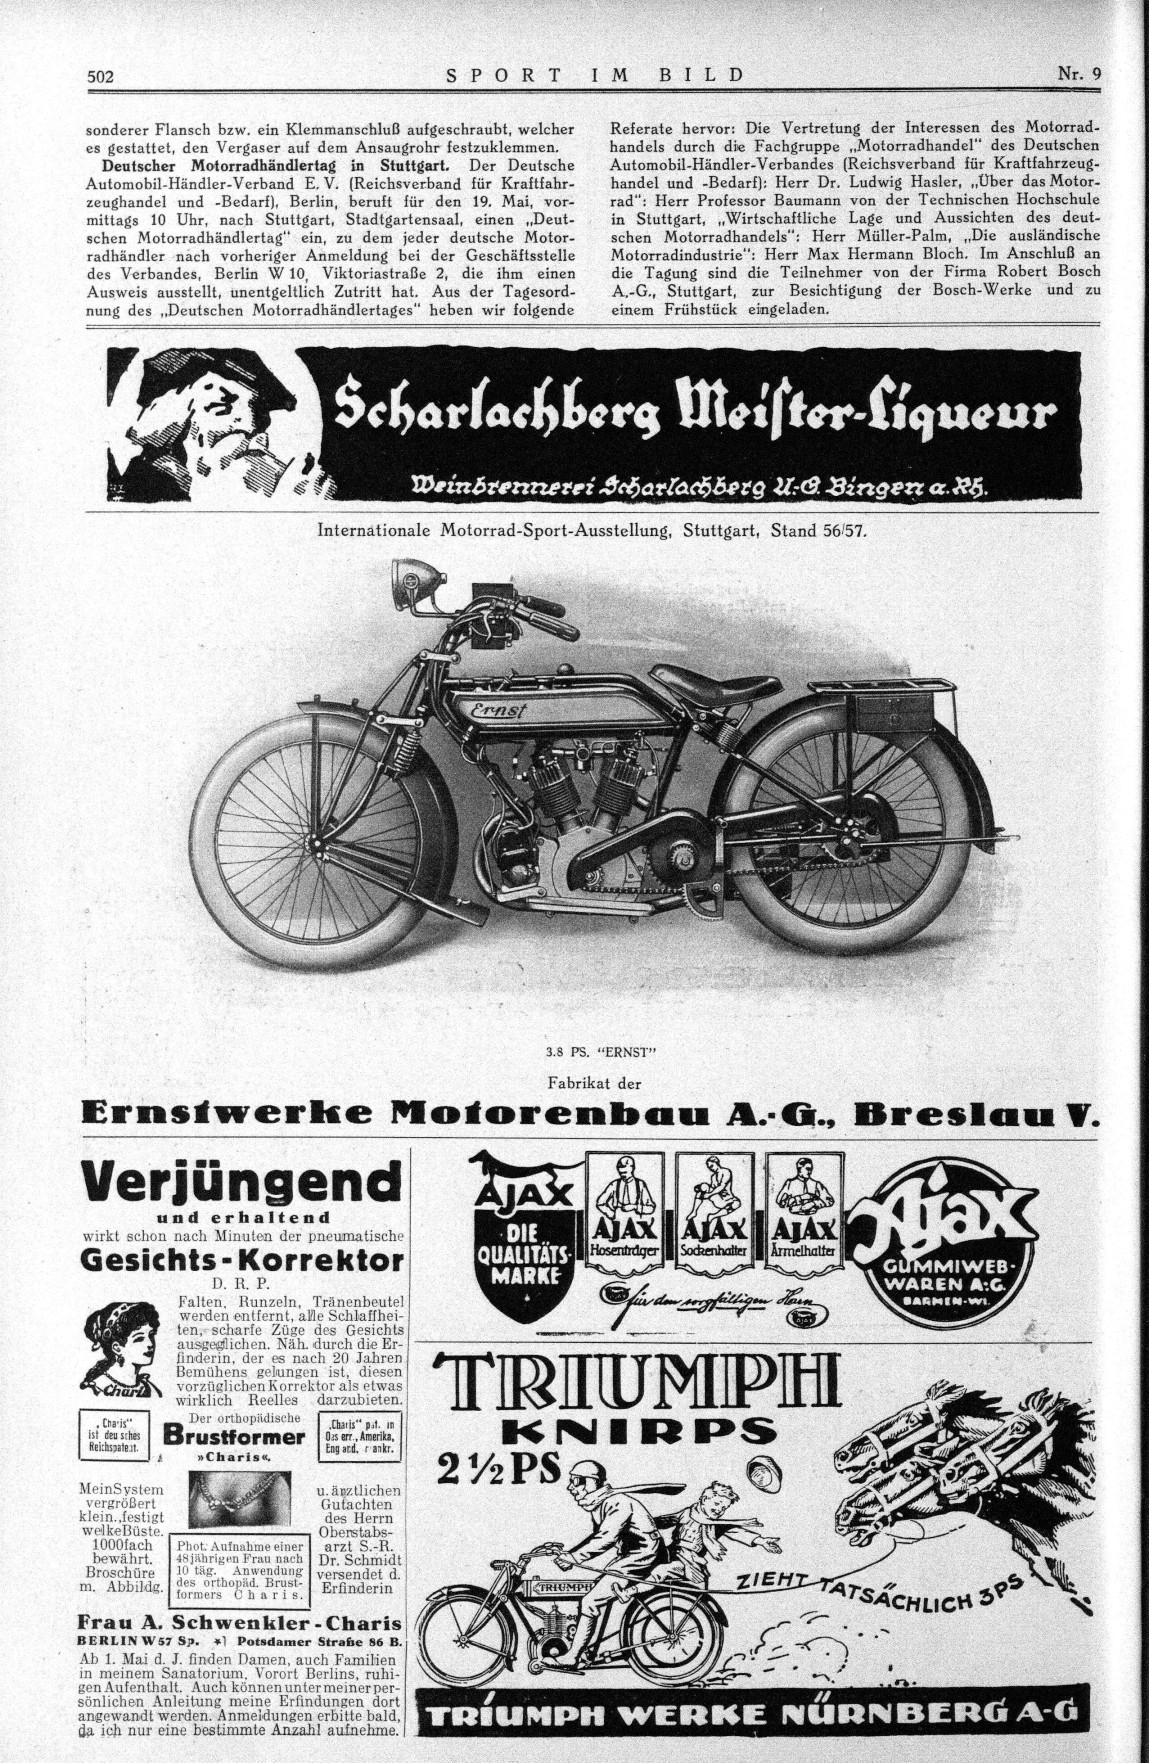 Triumph i in., 1924 anno.onb.ac.at/cgi-content/anno-plus?aid=sib&datum=1924&page=478&size=45